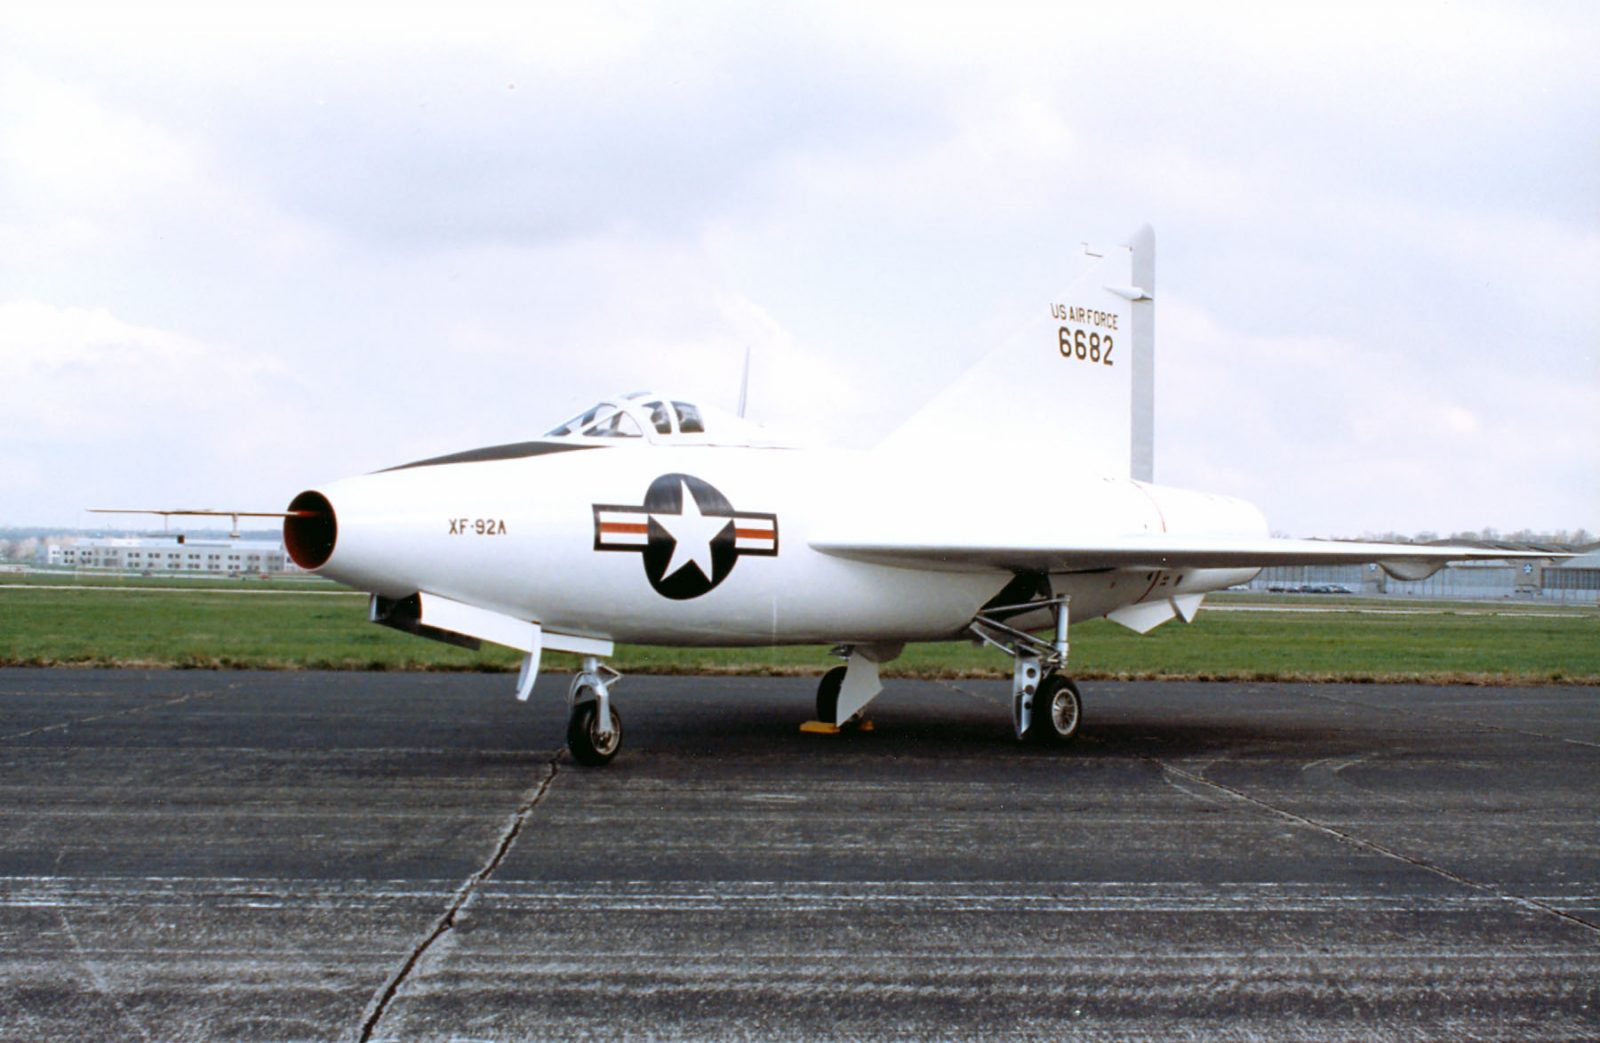 Convair XF-92A Dart